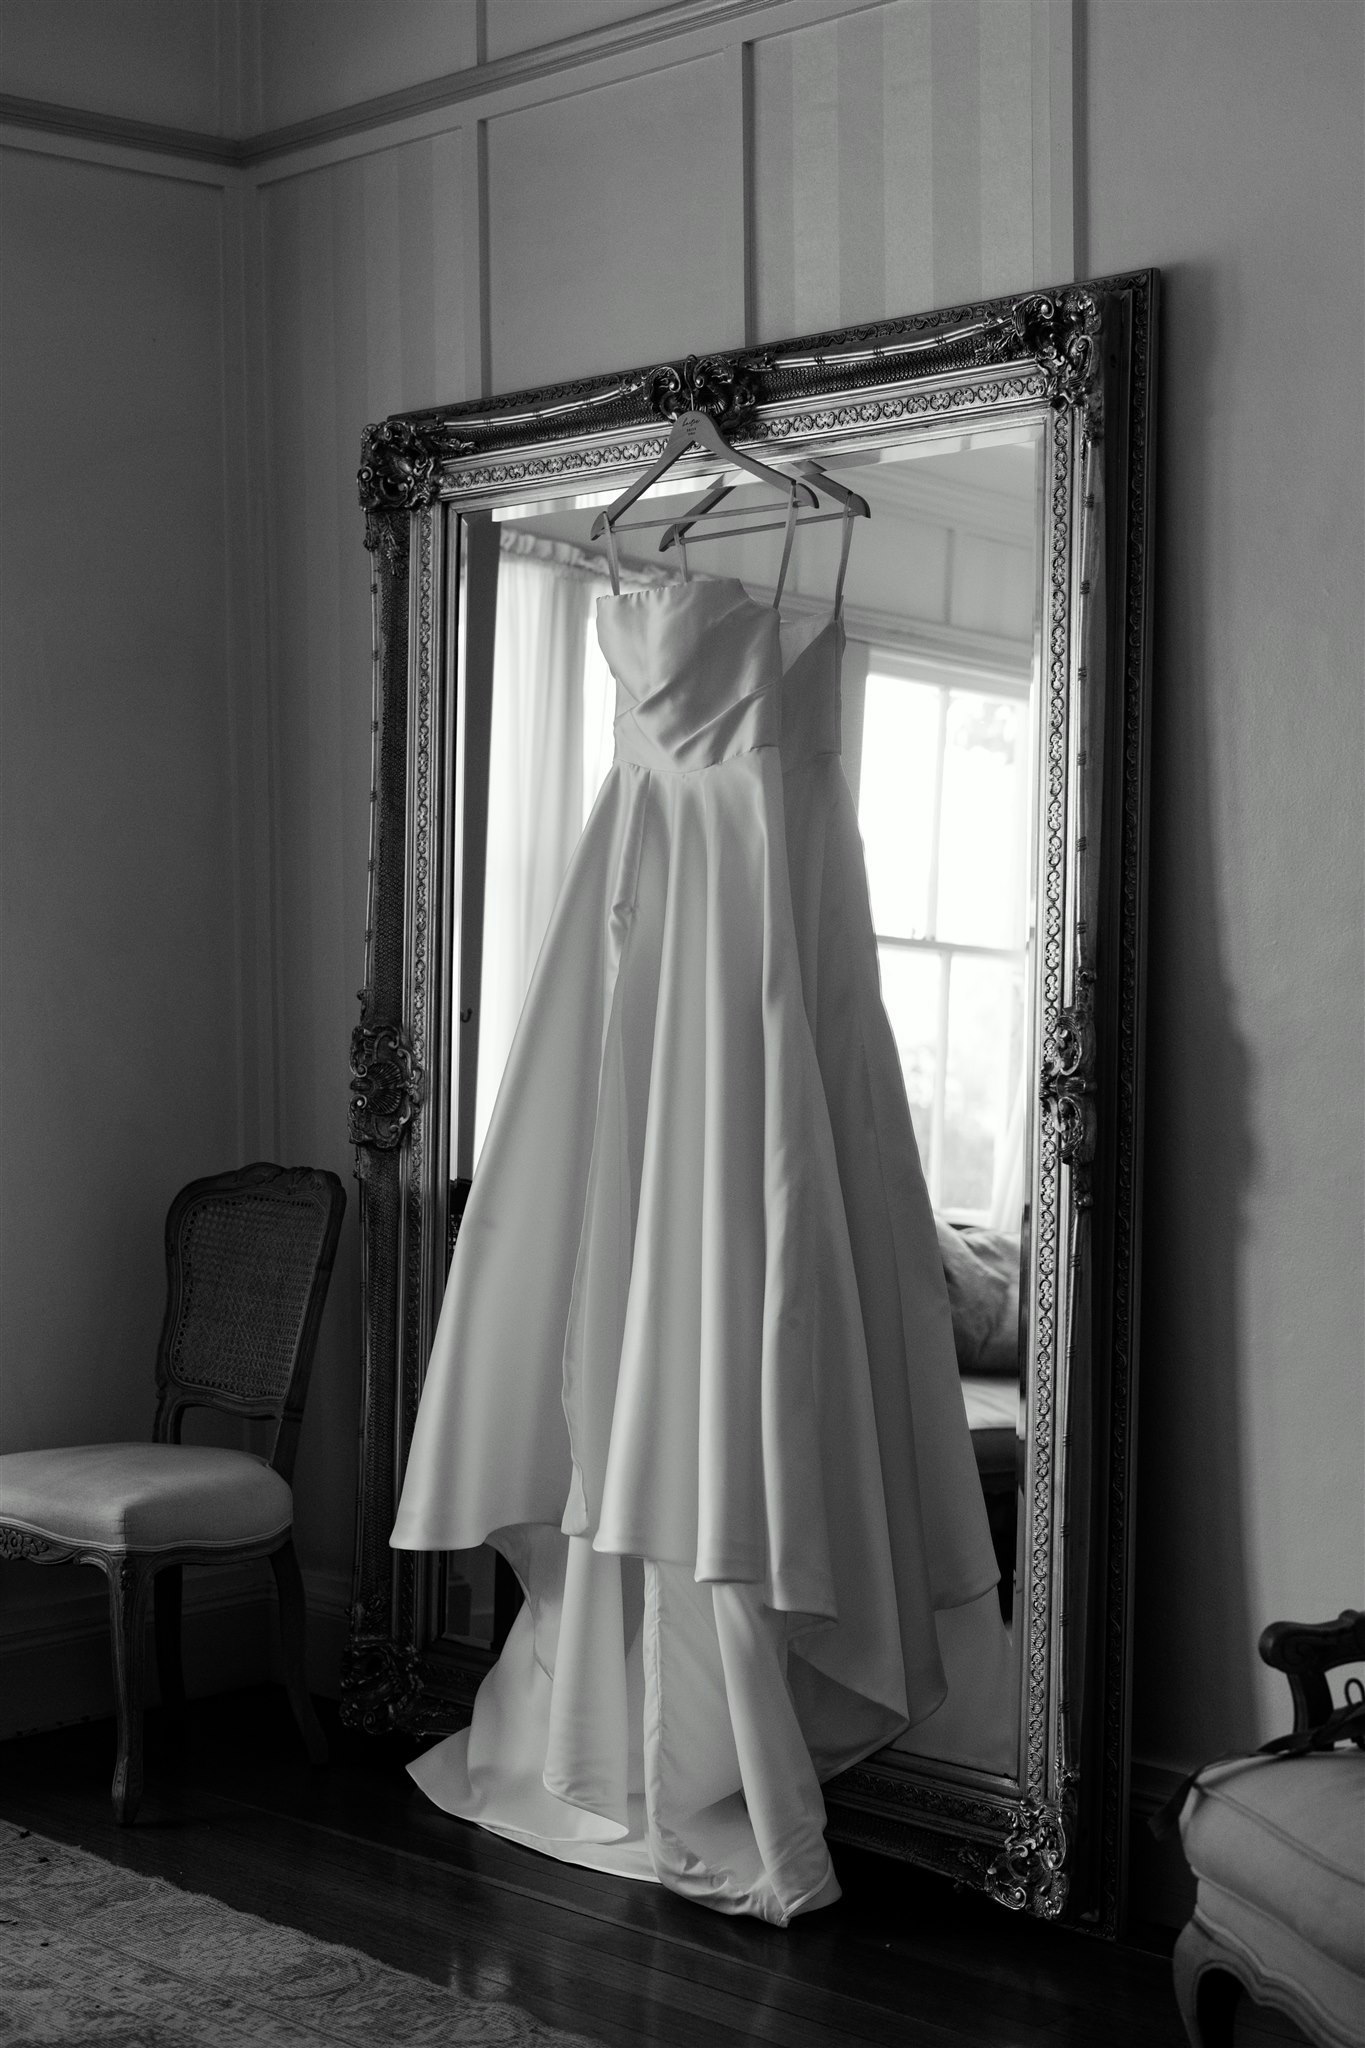 Wedding dress hanging from hanger